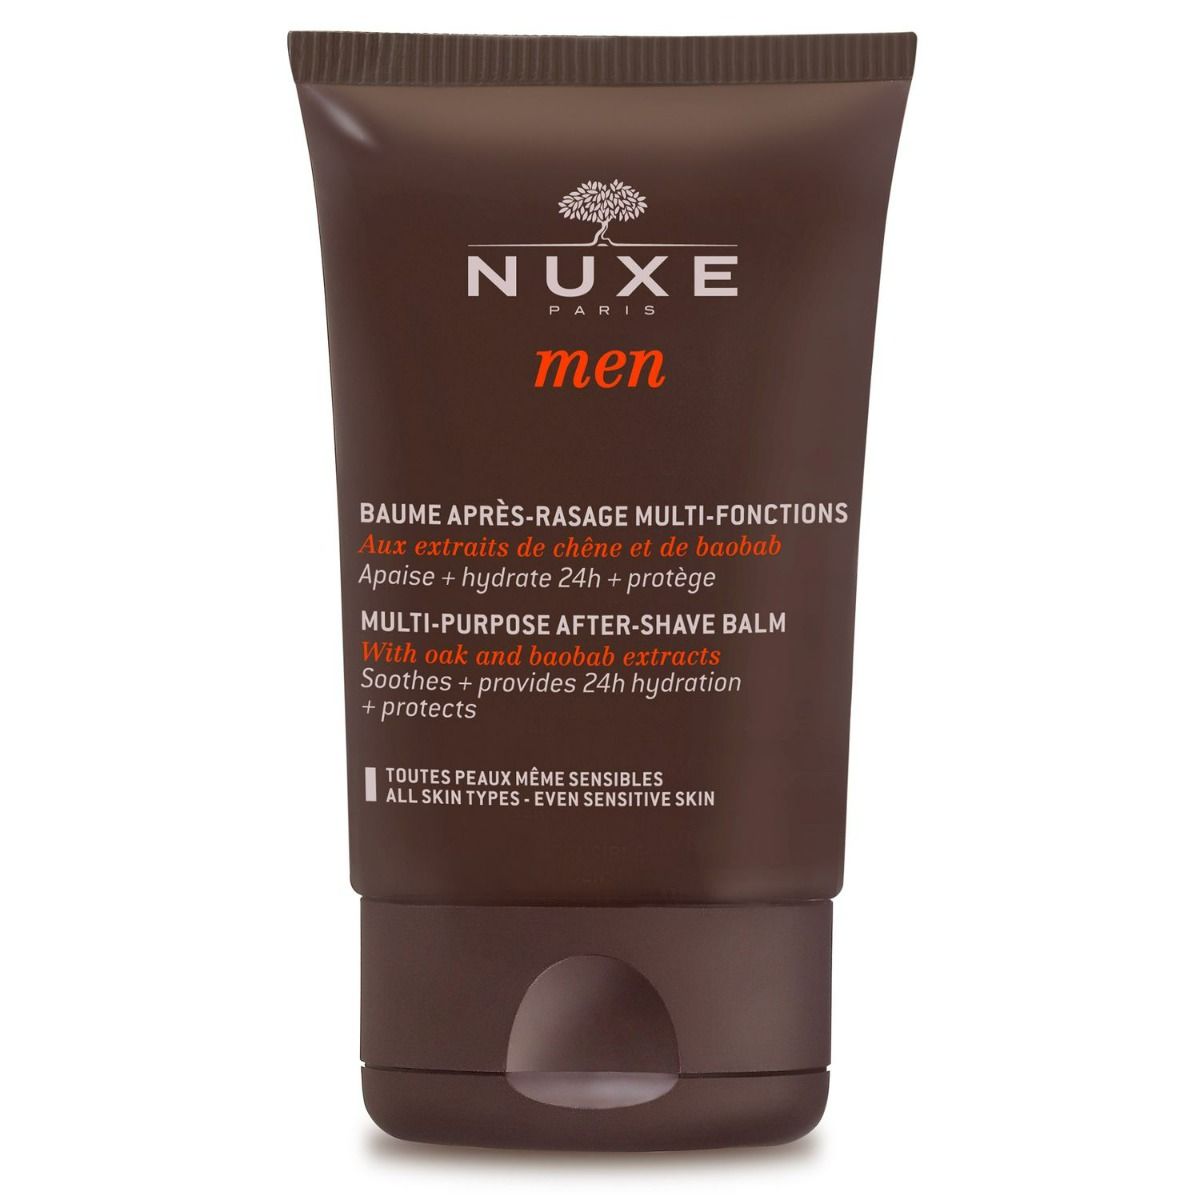 Nuxe Men Baume Après-Rasage бальзам после бритья, 50 ml цена и фото